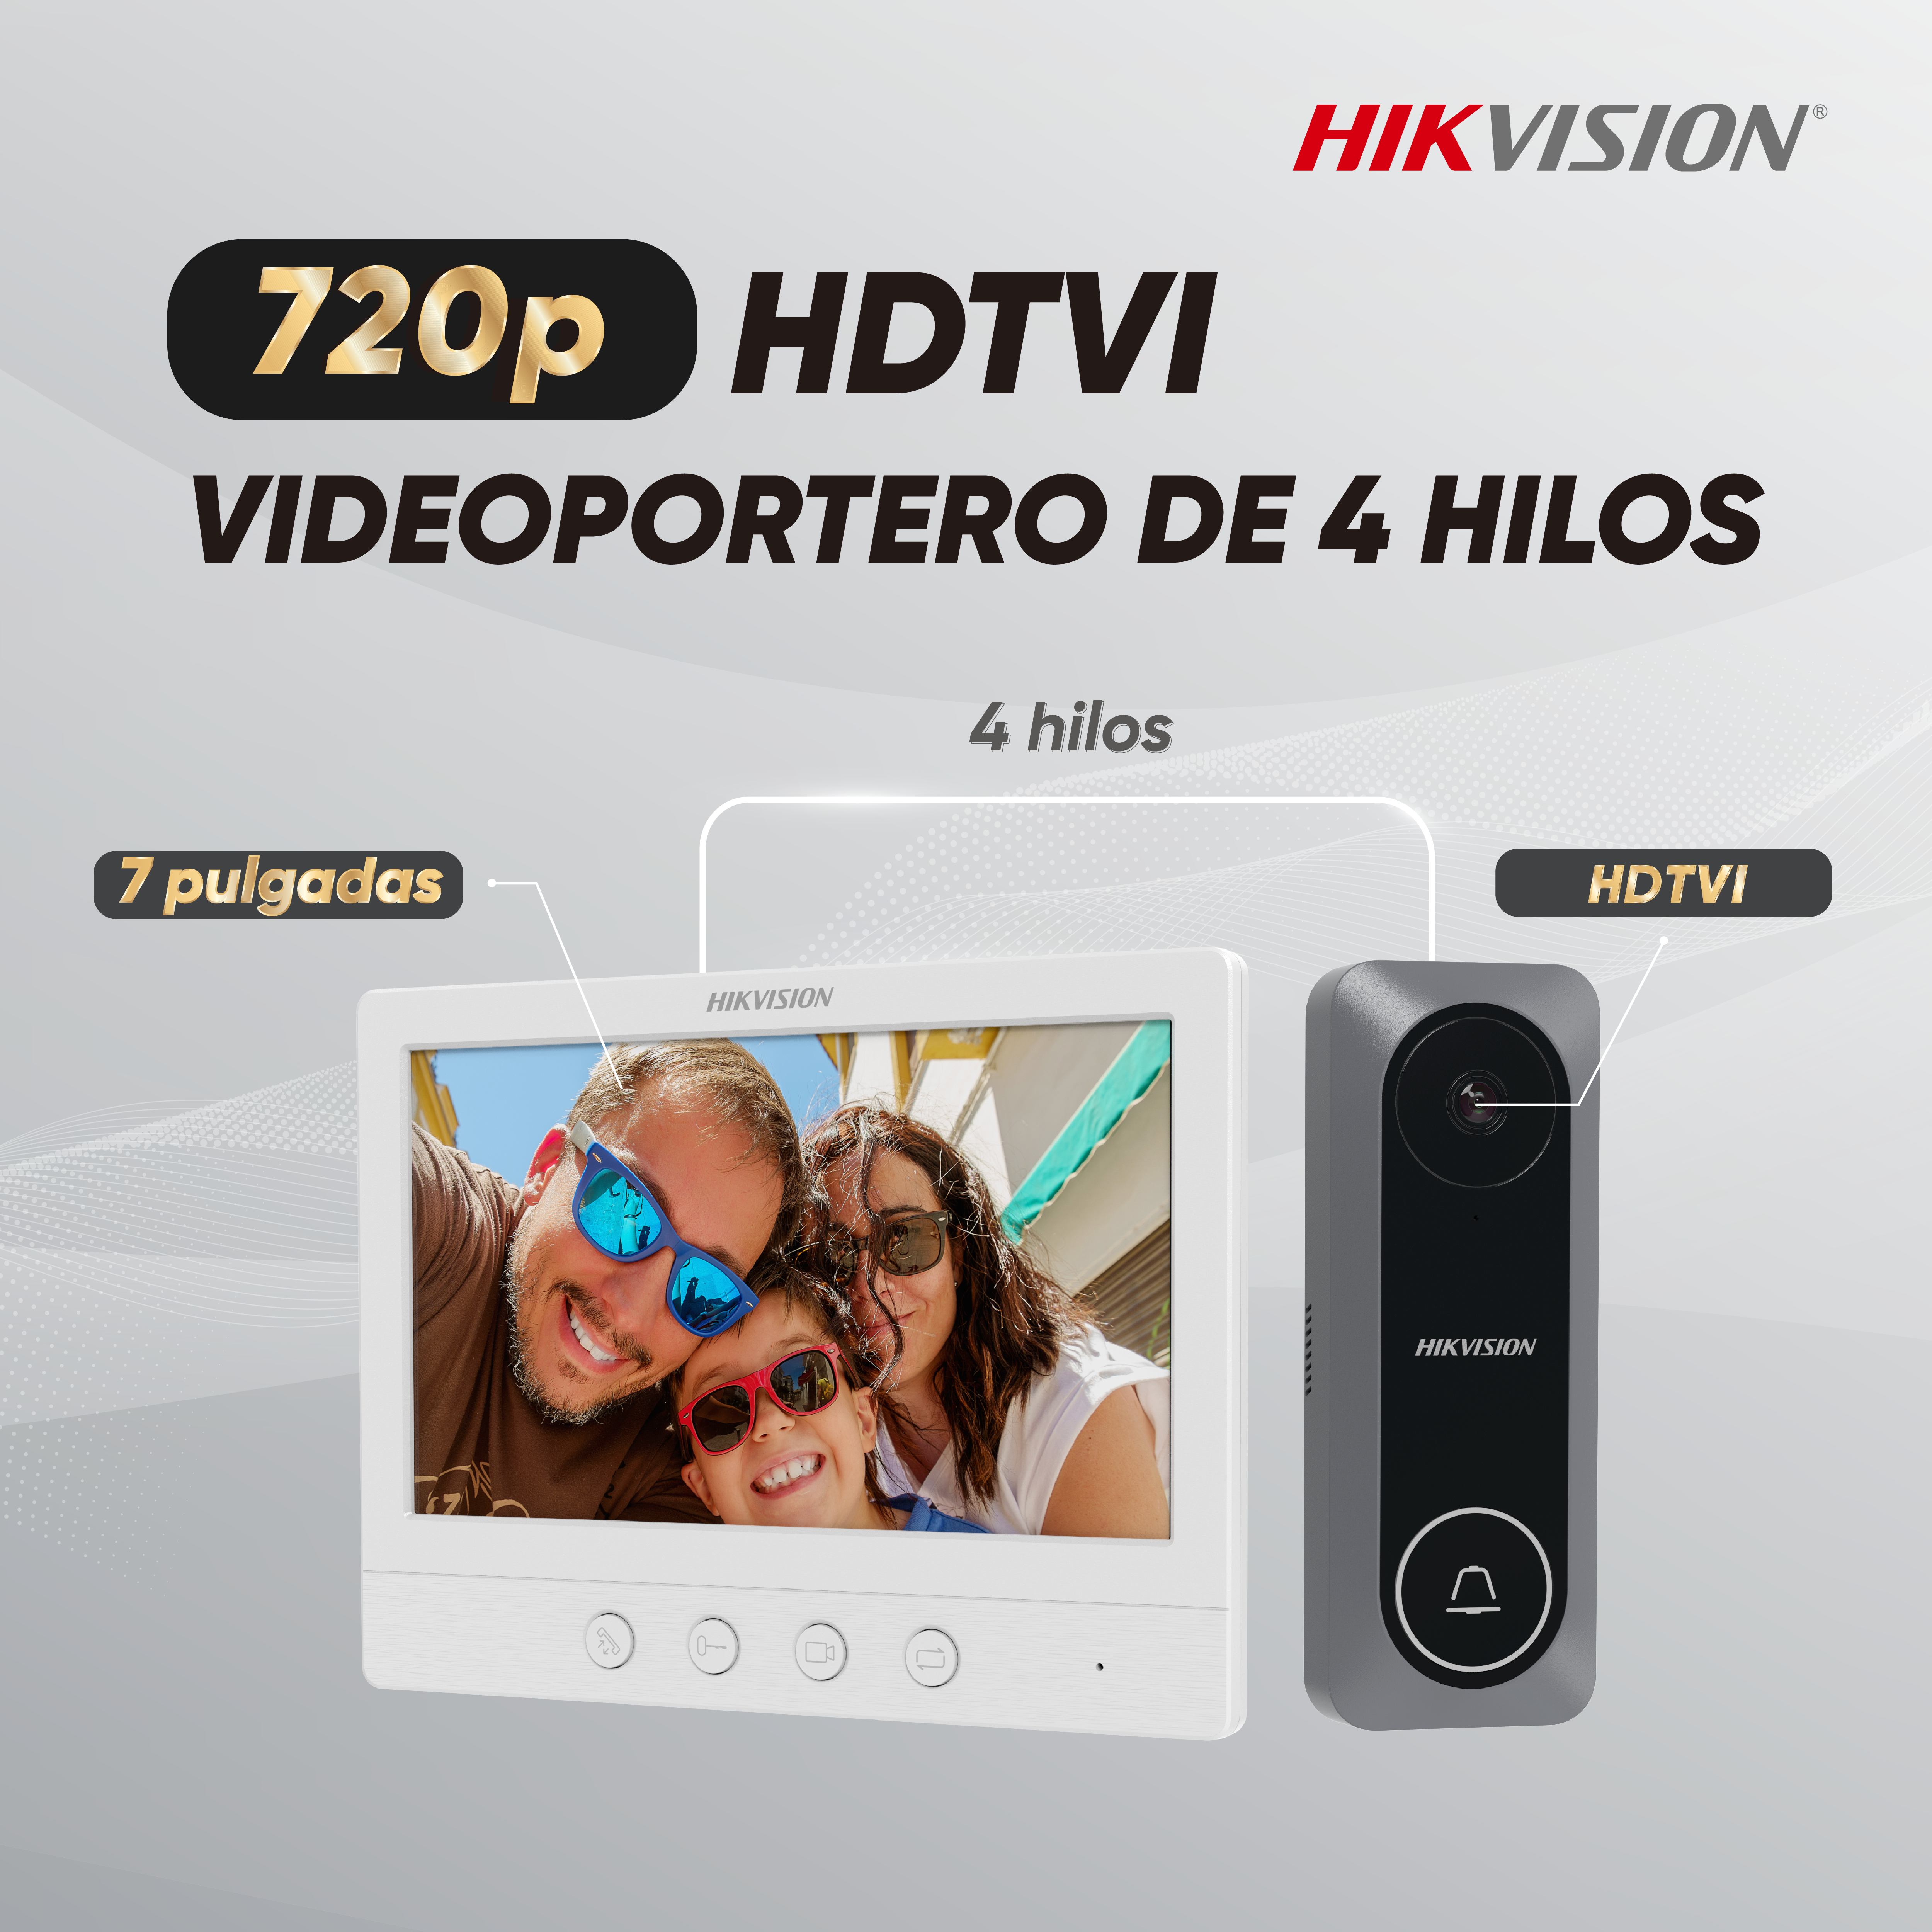 Redes Video Portero_Caratula HikRecursos